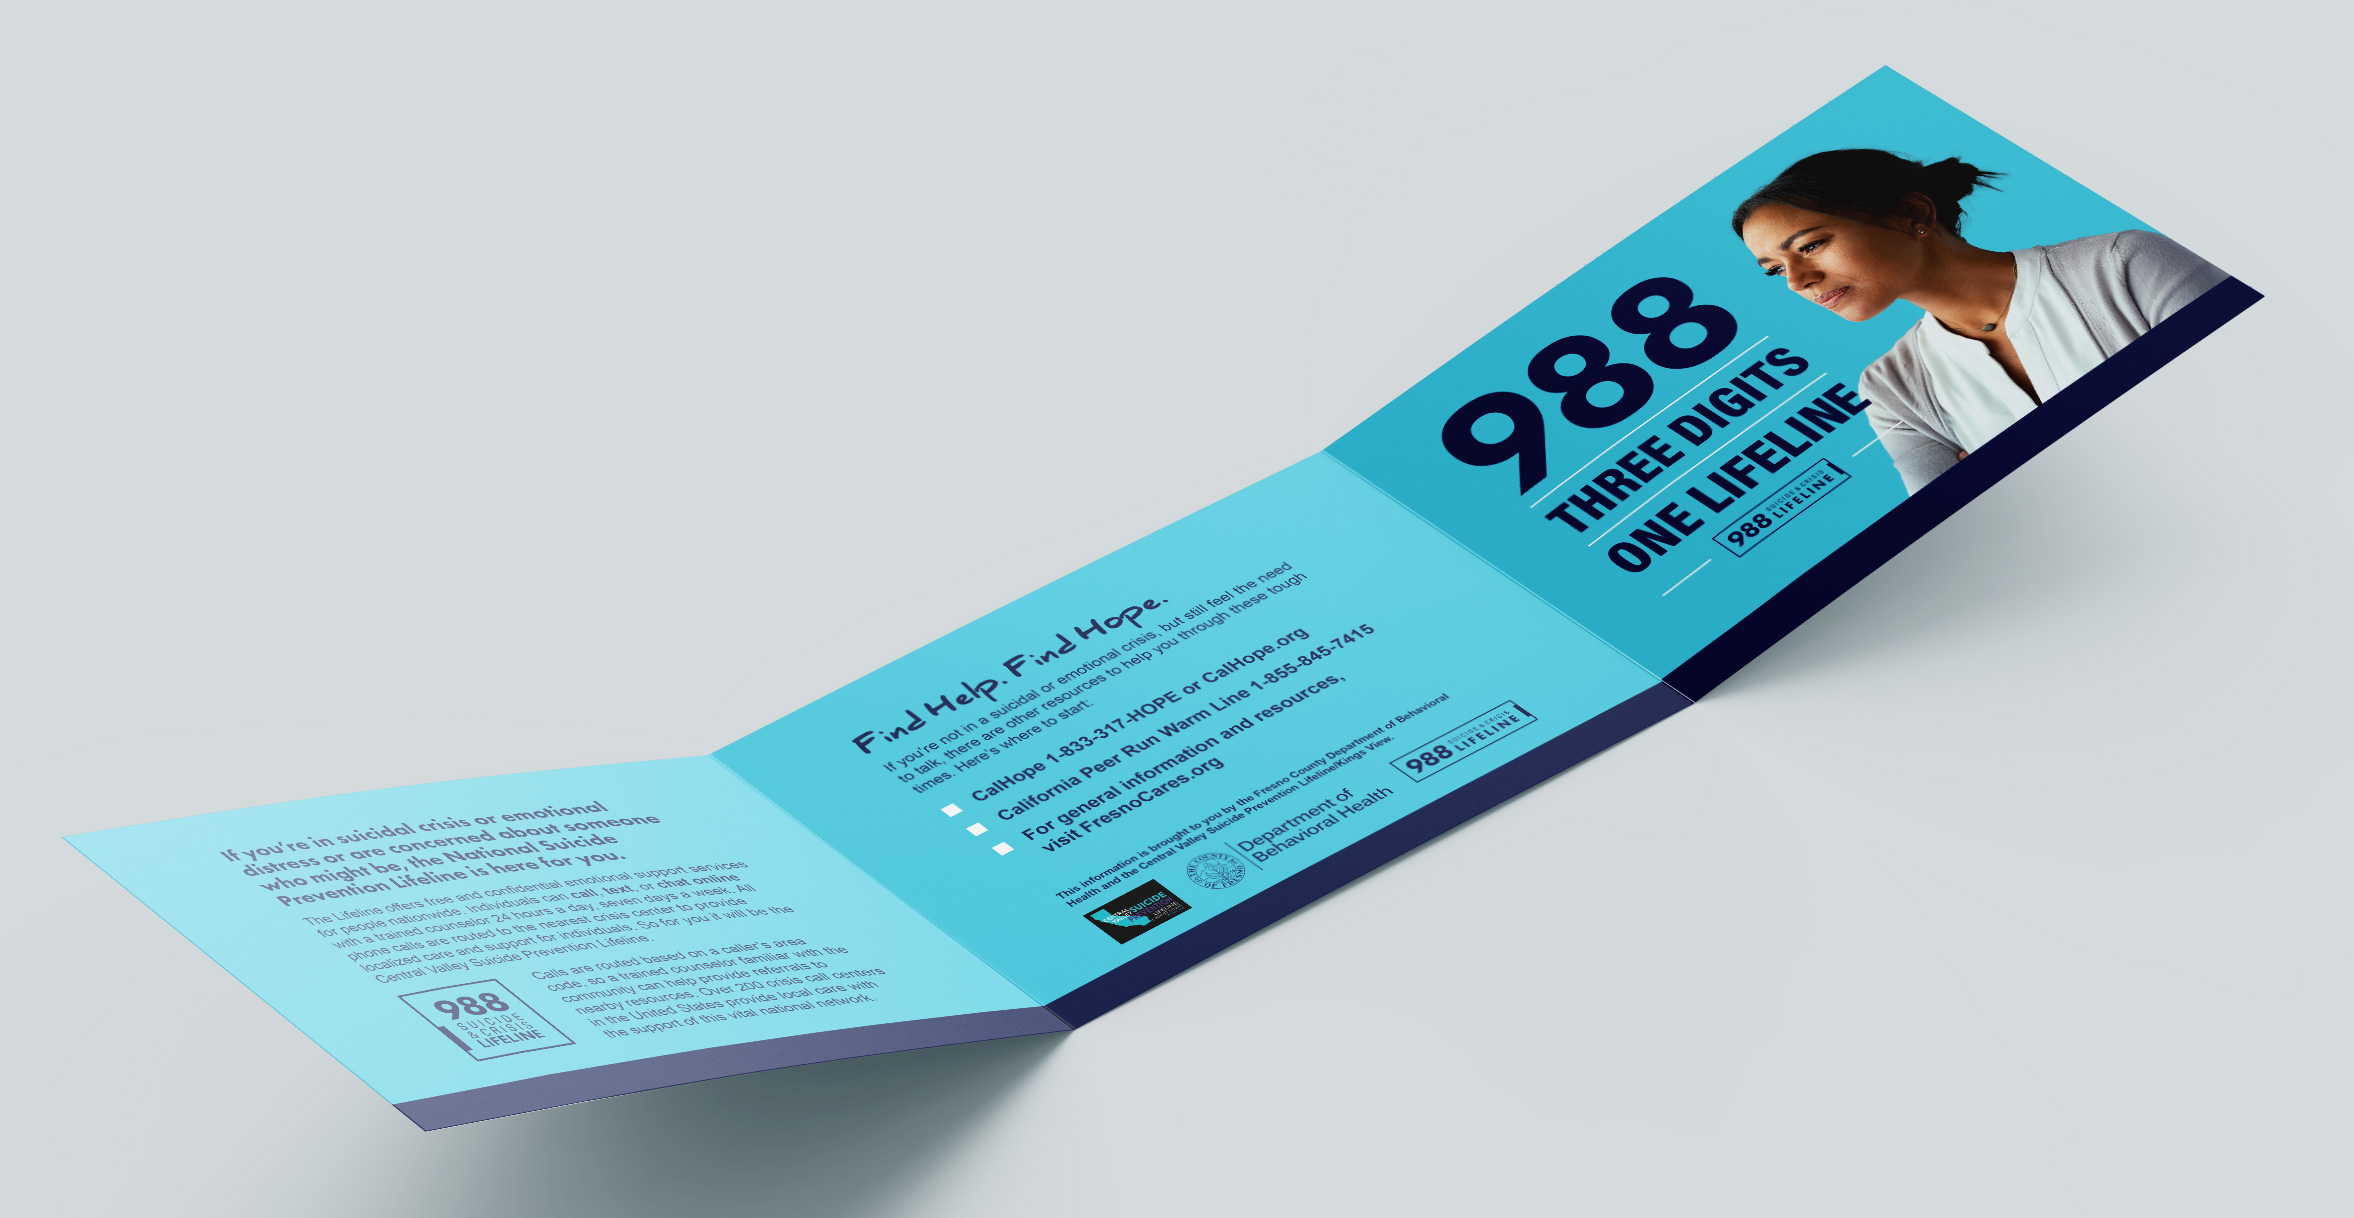 988 Suicide and Crisis Lifeline Brochure